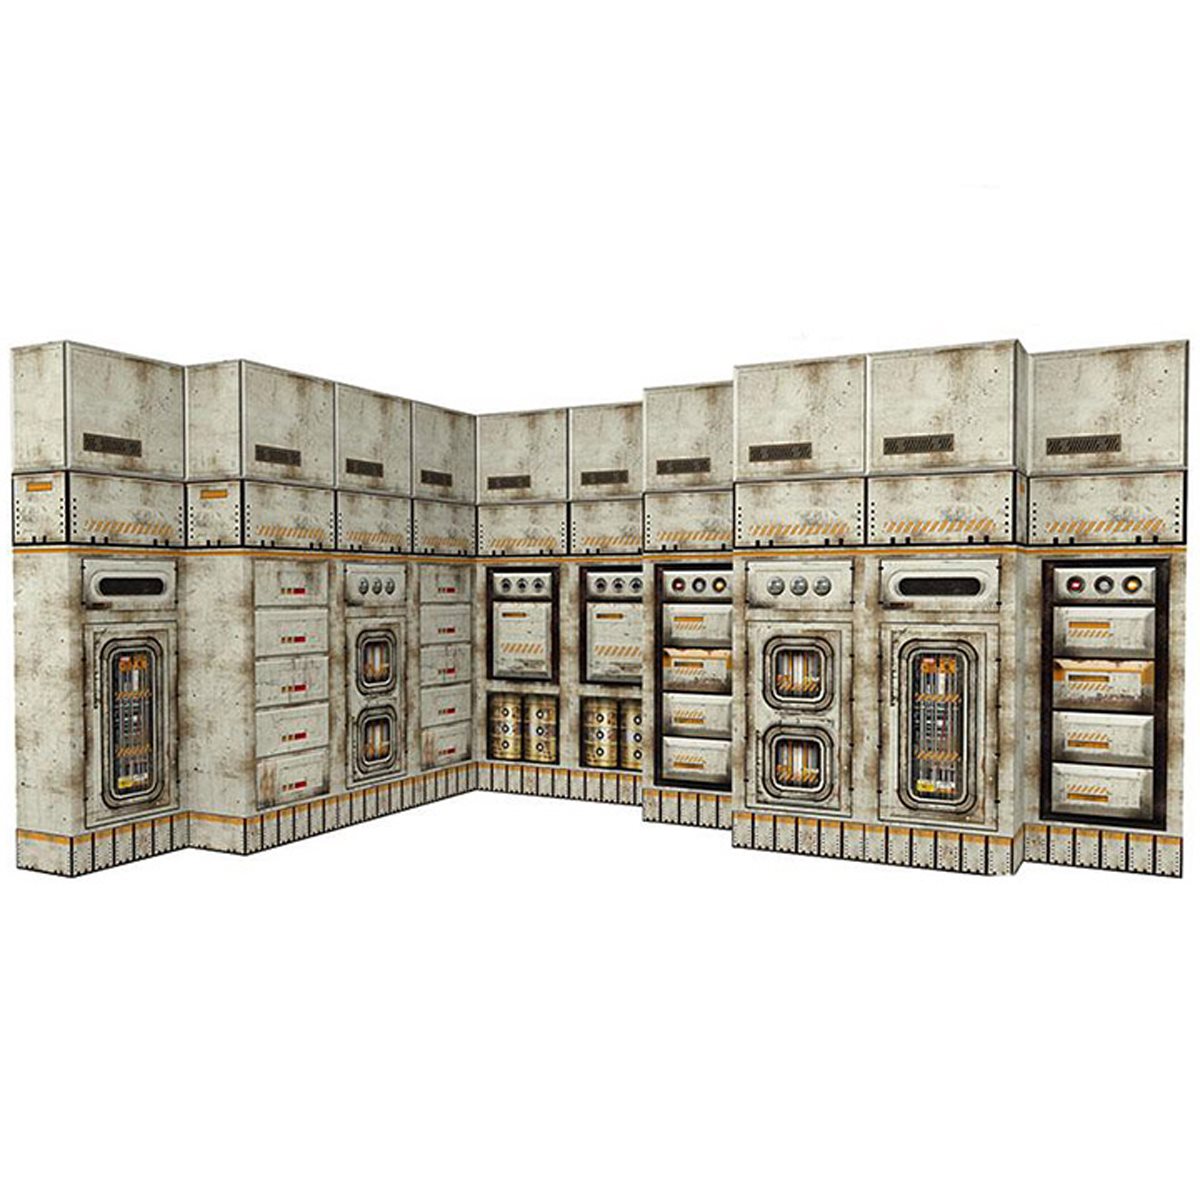 Sector 07 Modular Panels Pop-Up 1:12 Scale Diorama画像